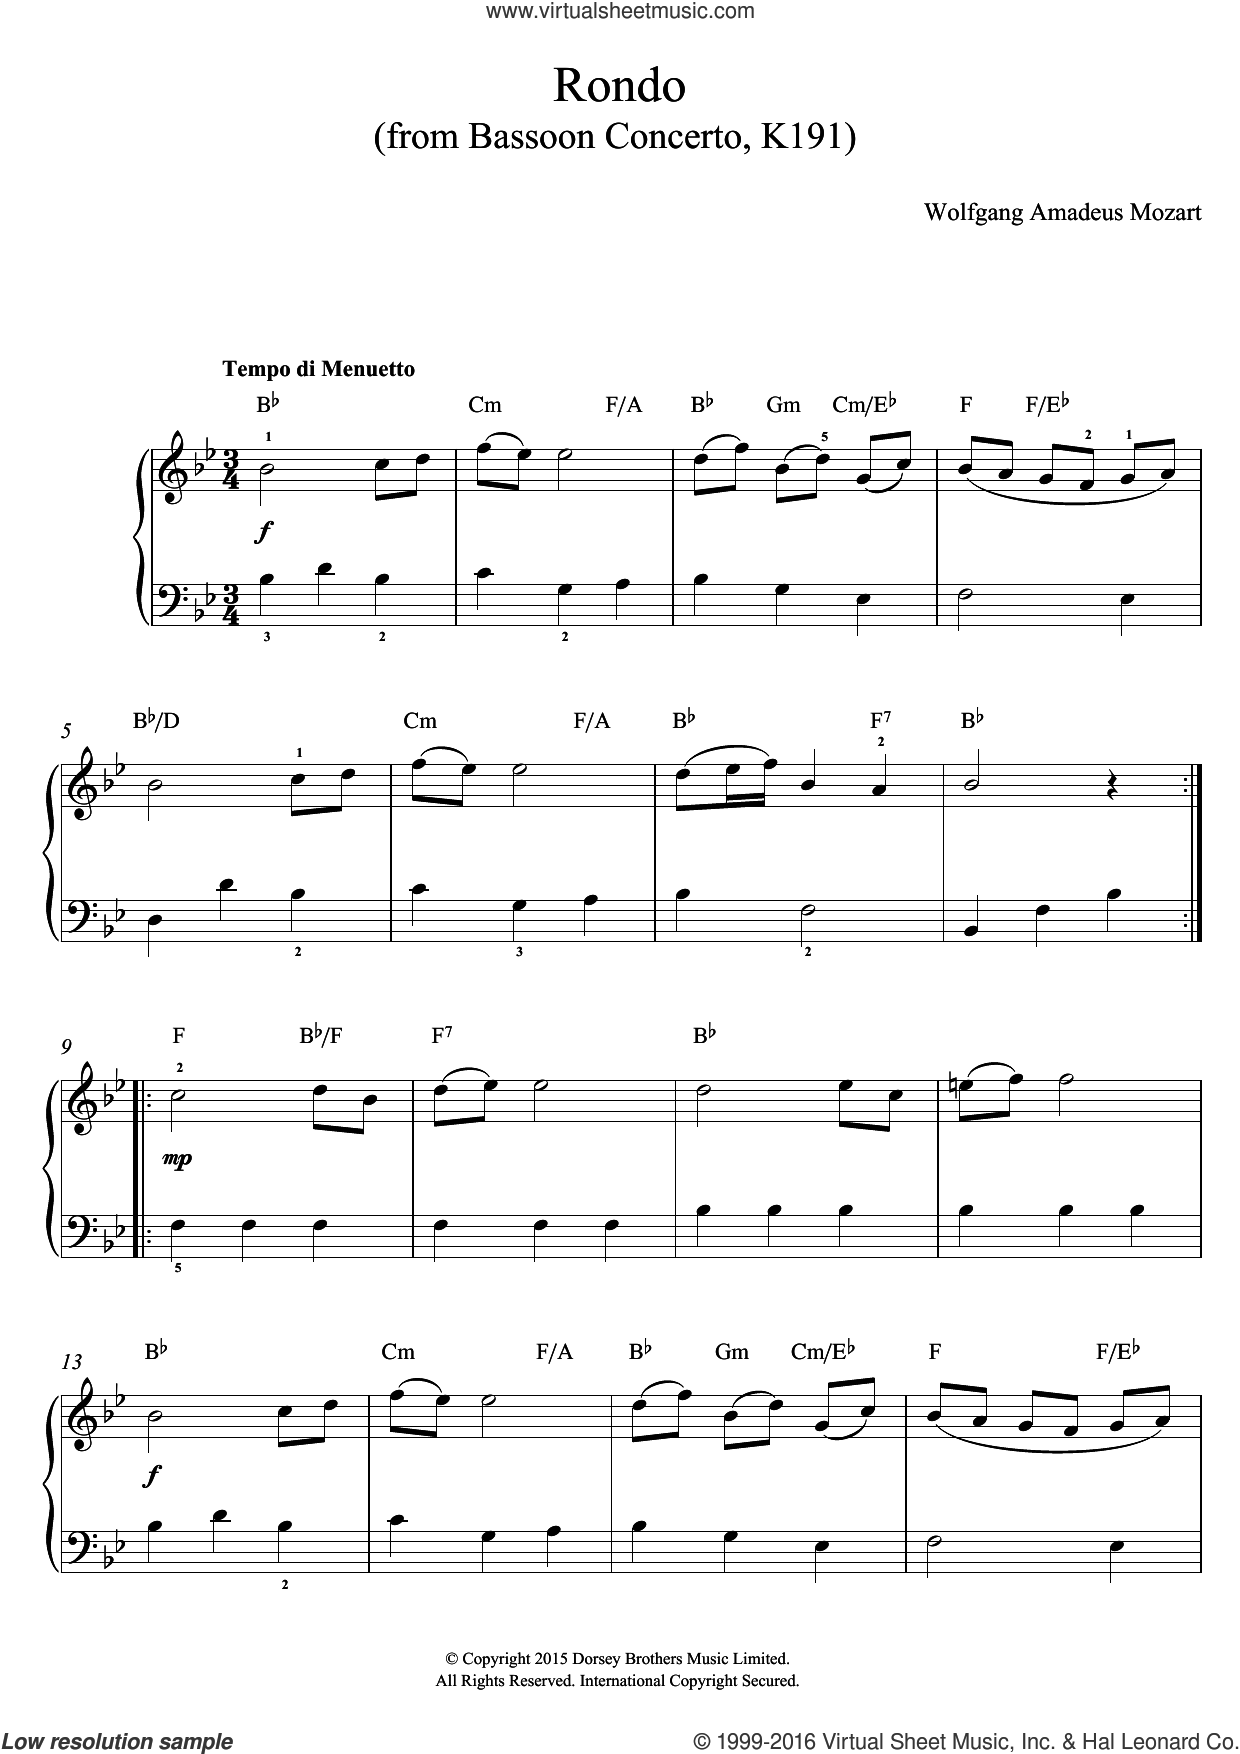 pdf Leonard Mozart- Concerto in B-Flat, K191 Trombone brass quartet sheet music-musescore-Scribd